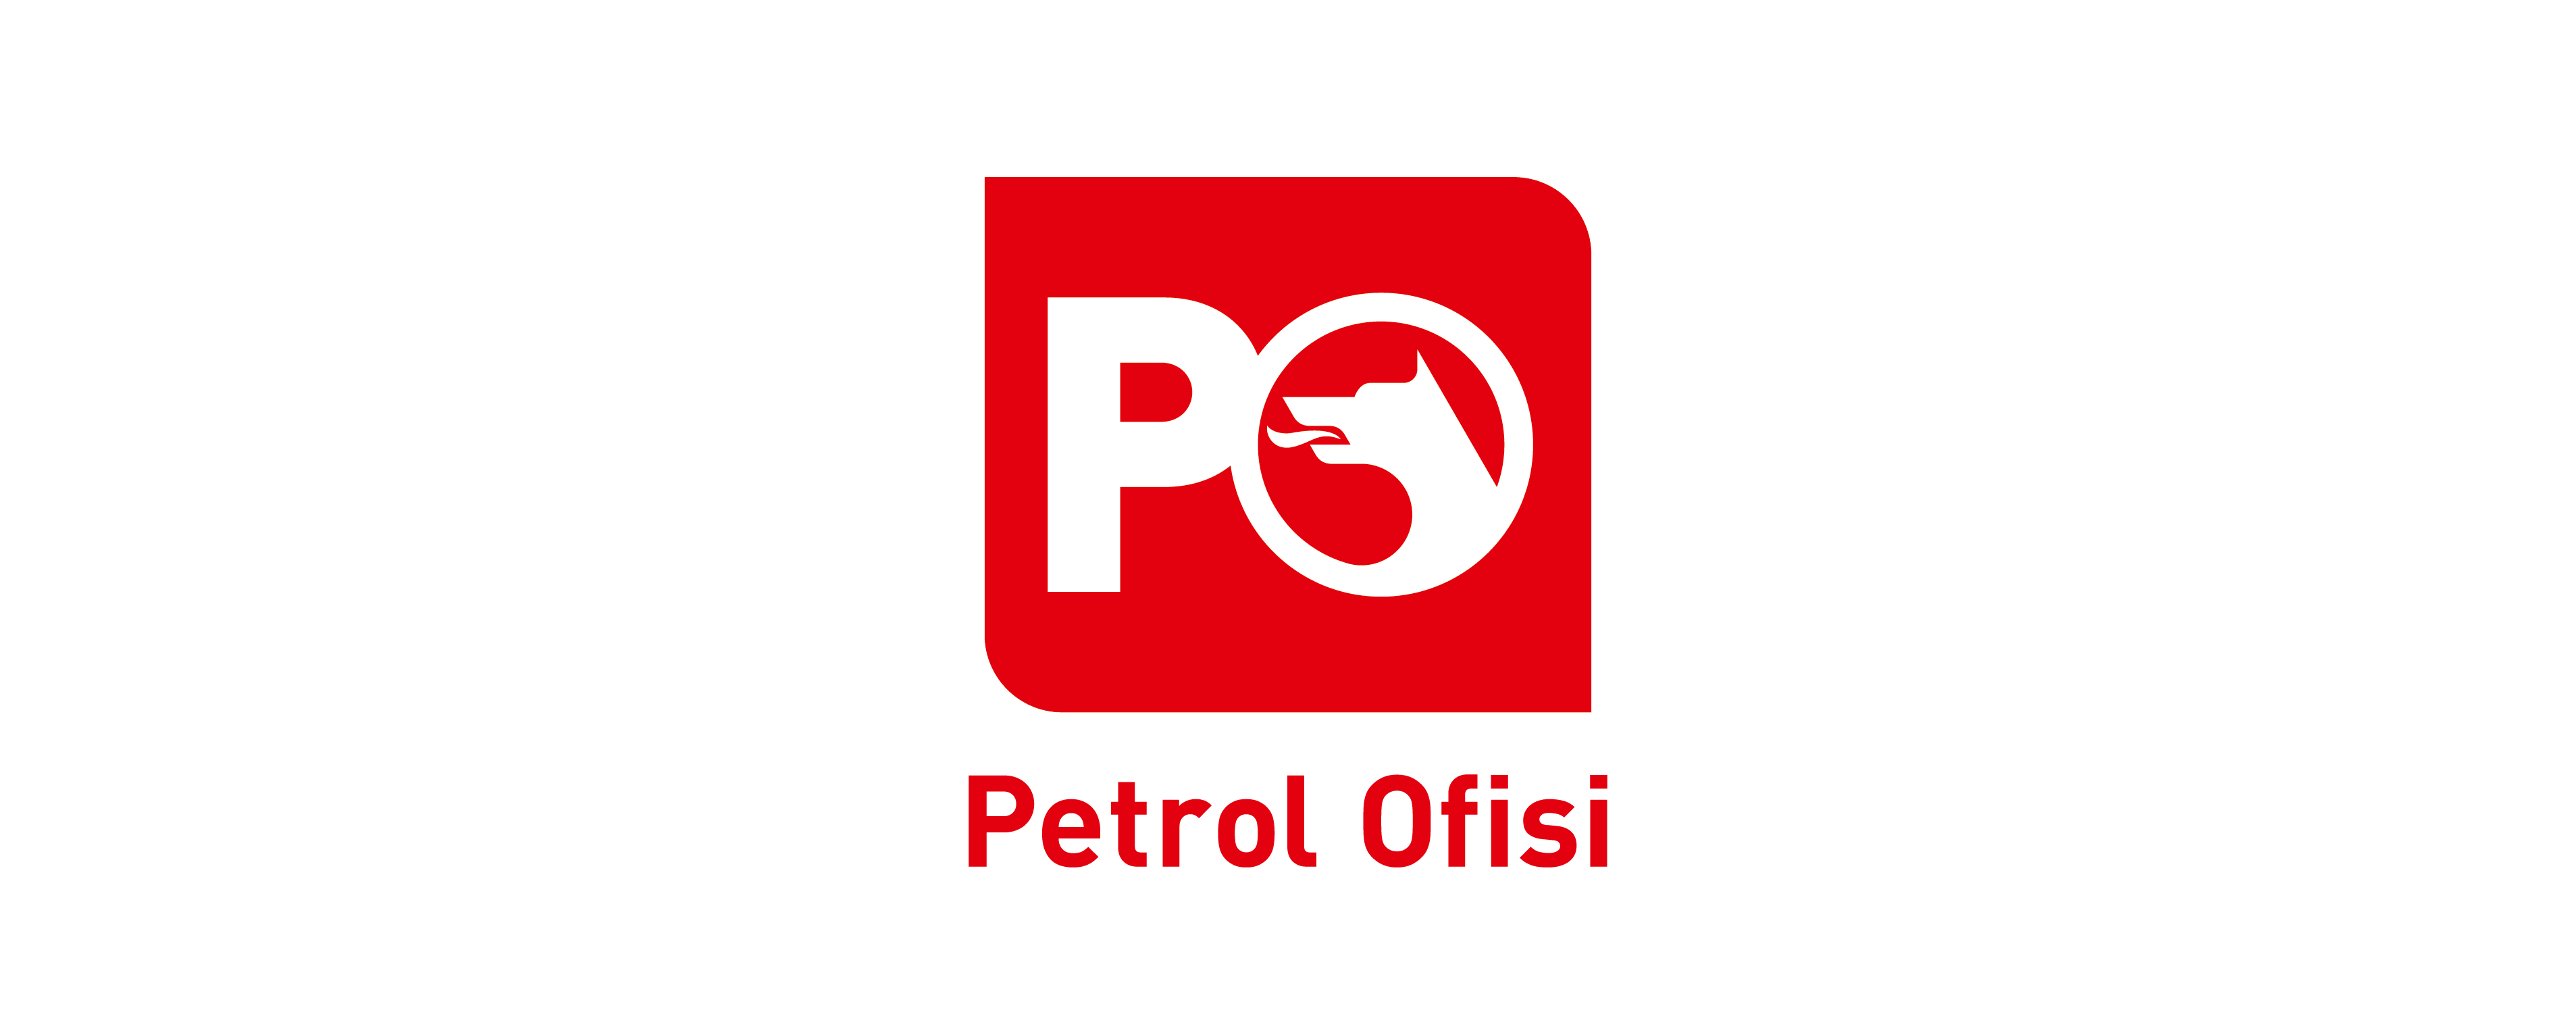 OMV Petrol Ofisi Brand Logo